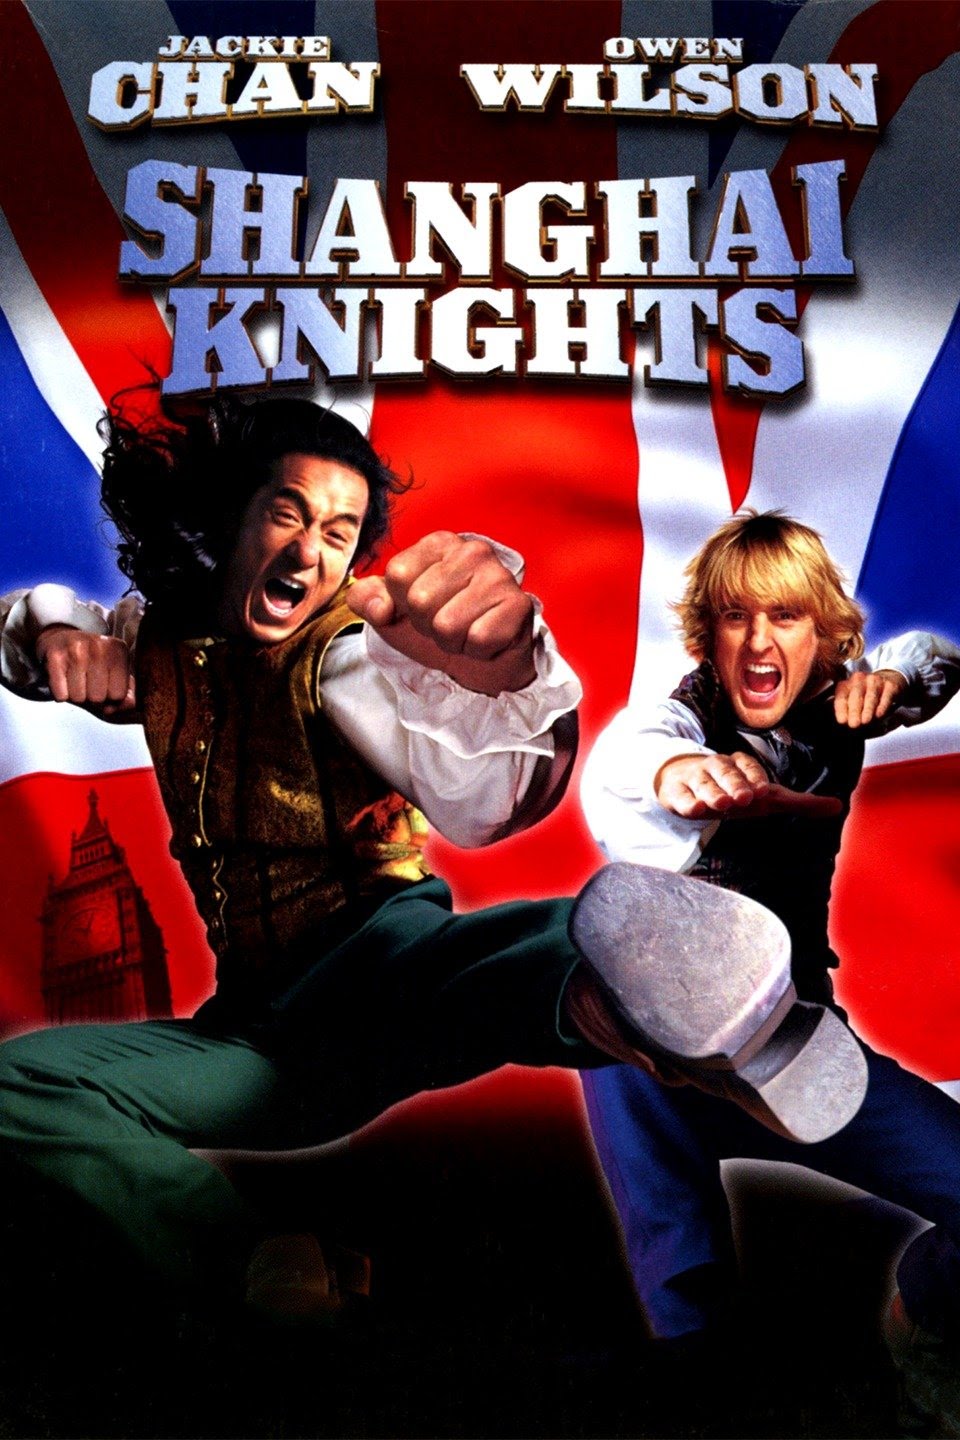 FULL MOVIE: Shanghai Knights (2003) [Action]